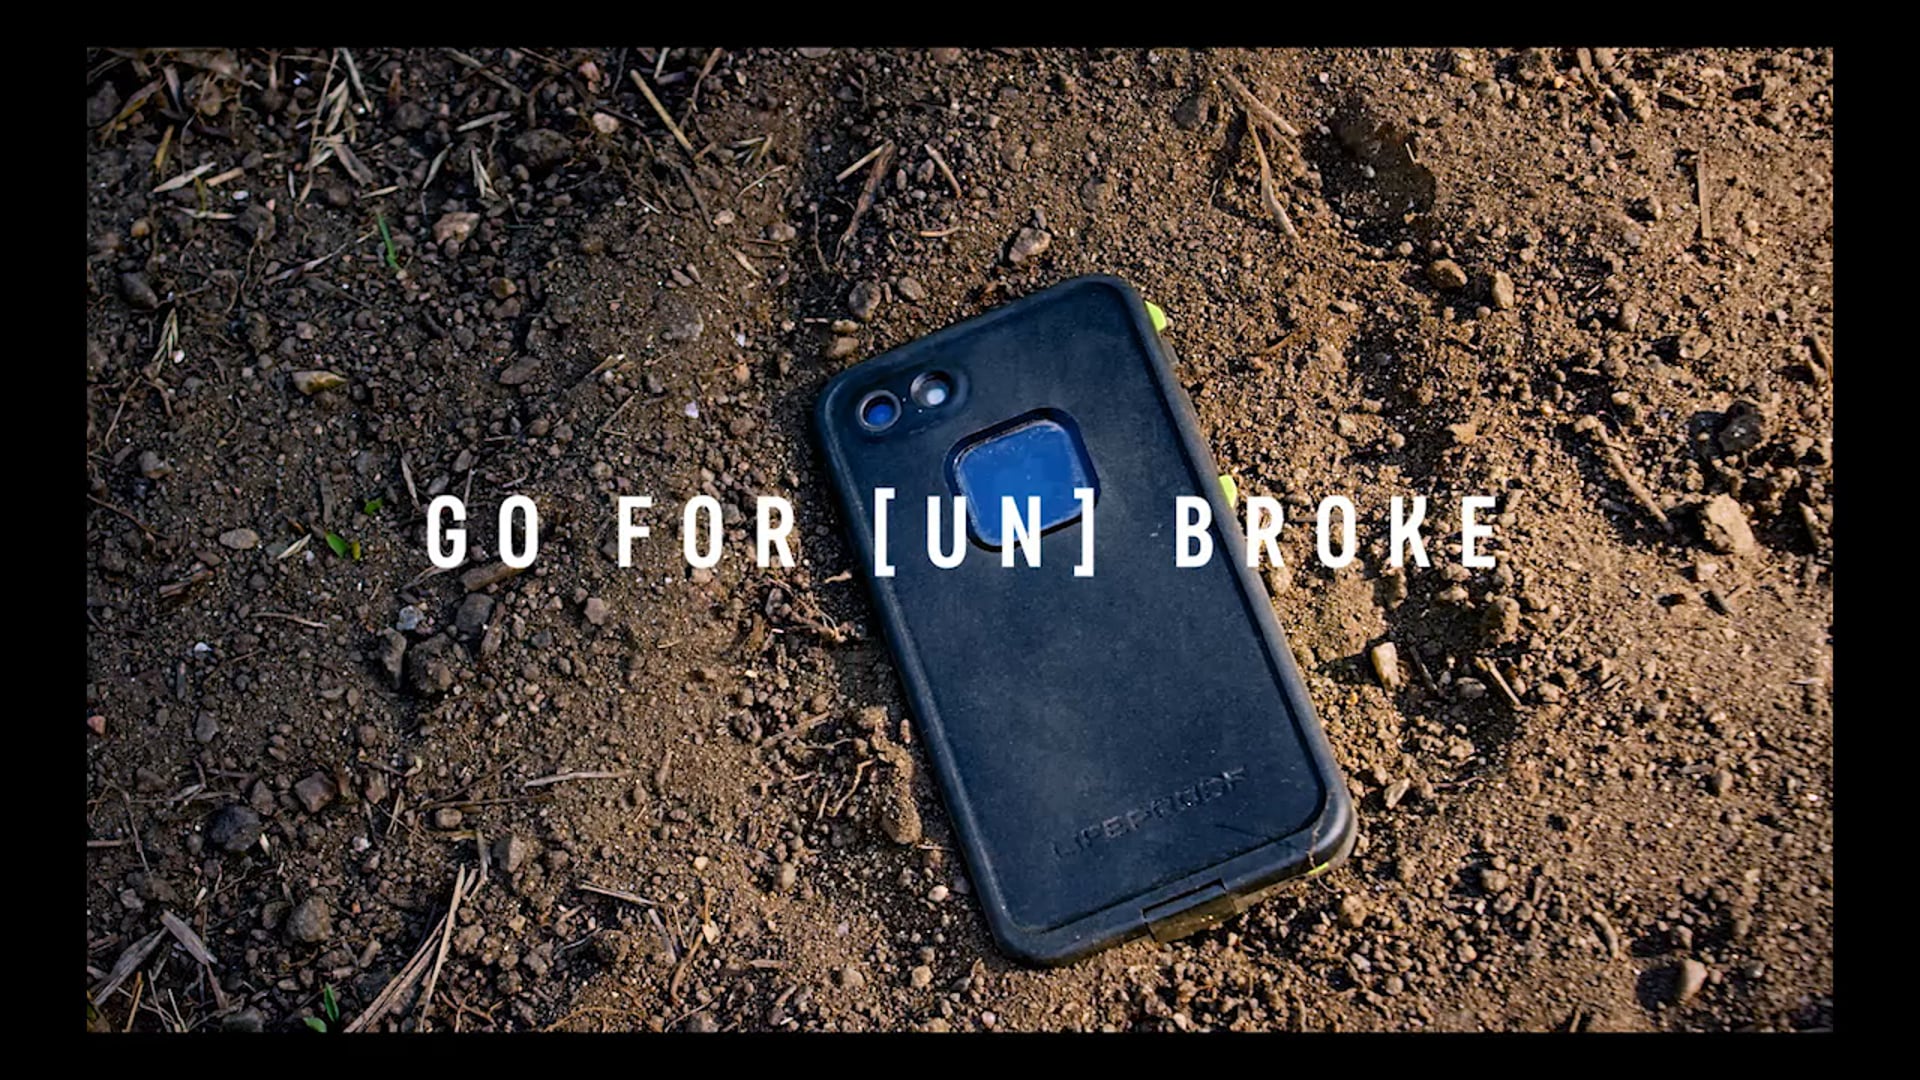 LifeProof - Go For [UN] Broke - Broadcast Commercial